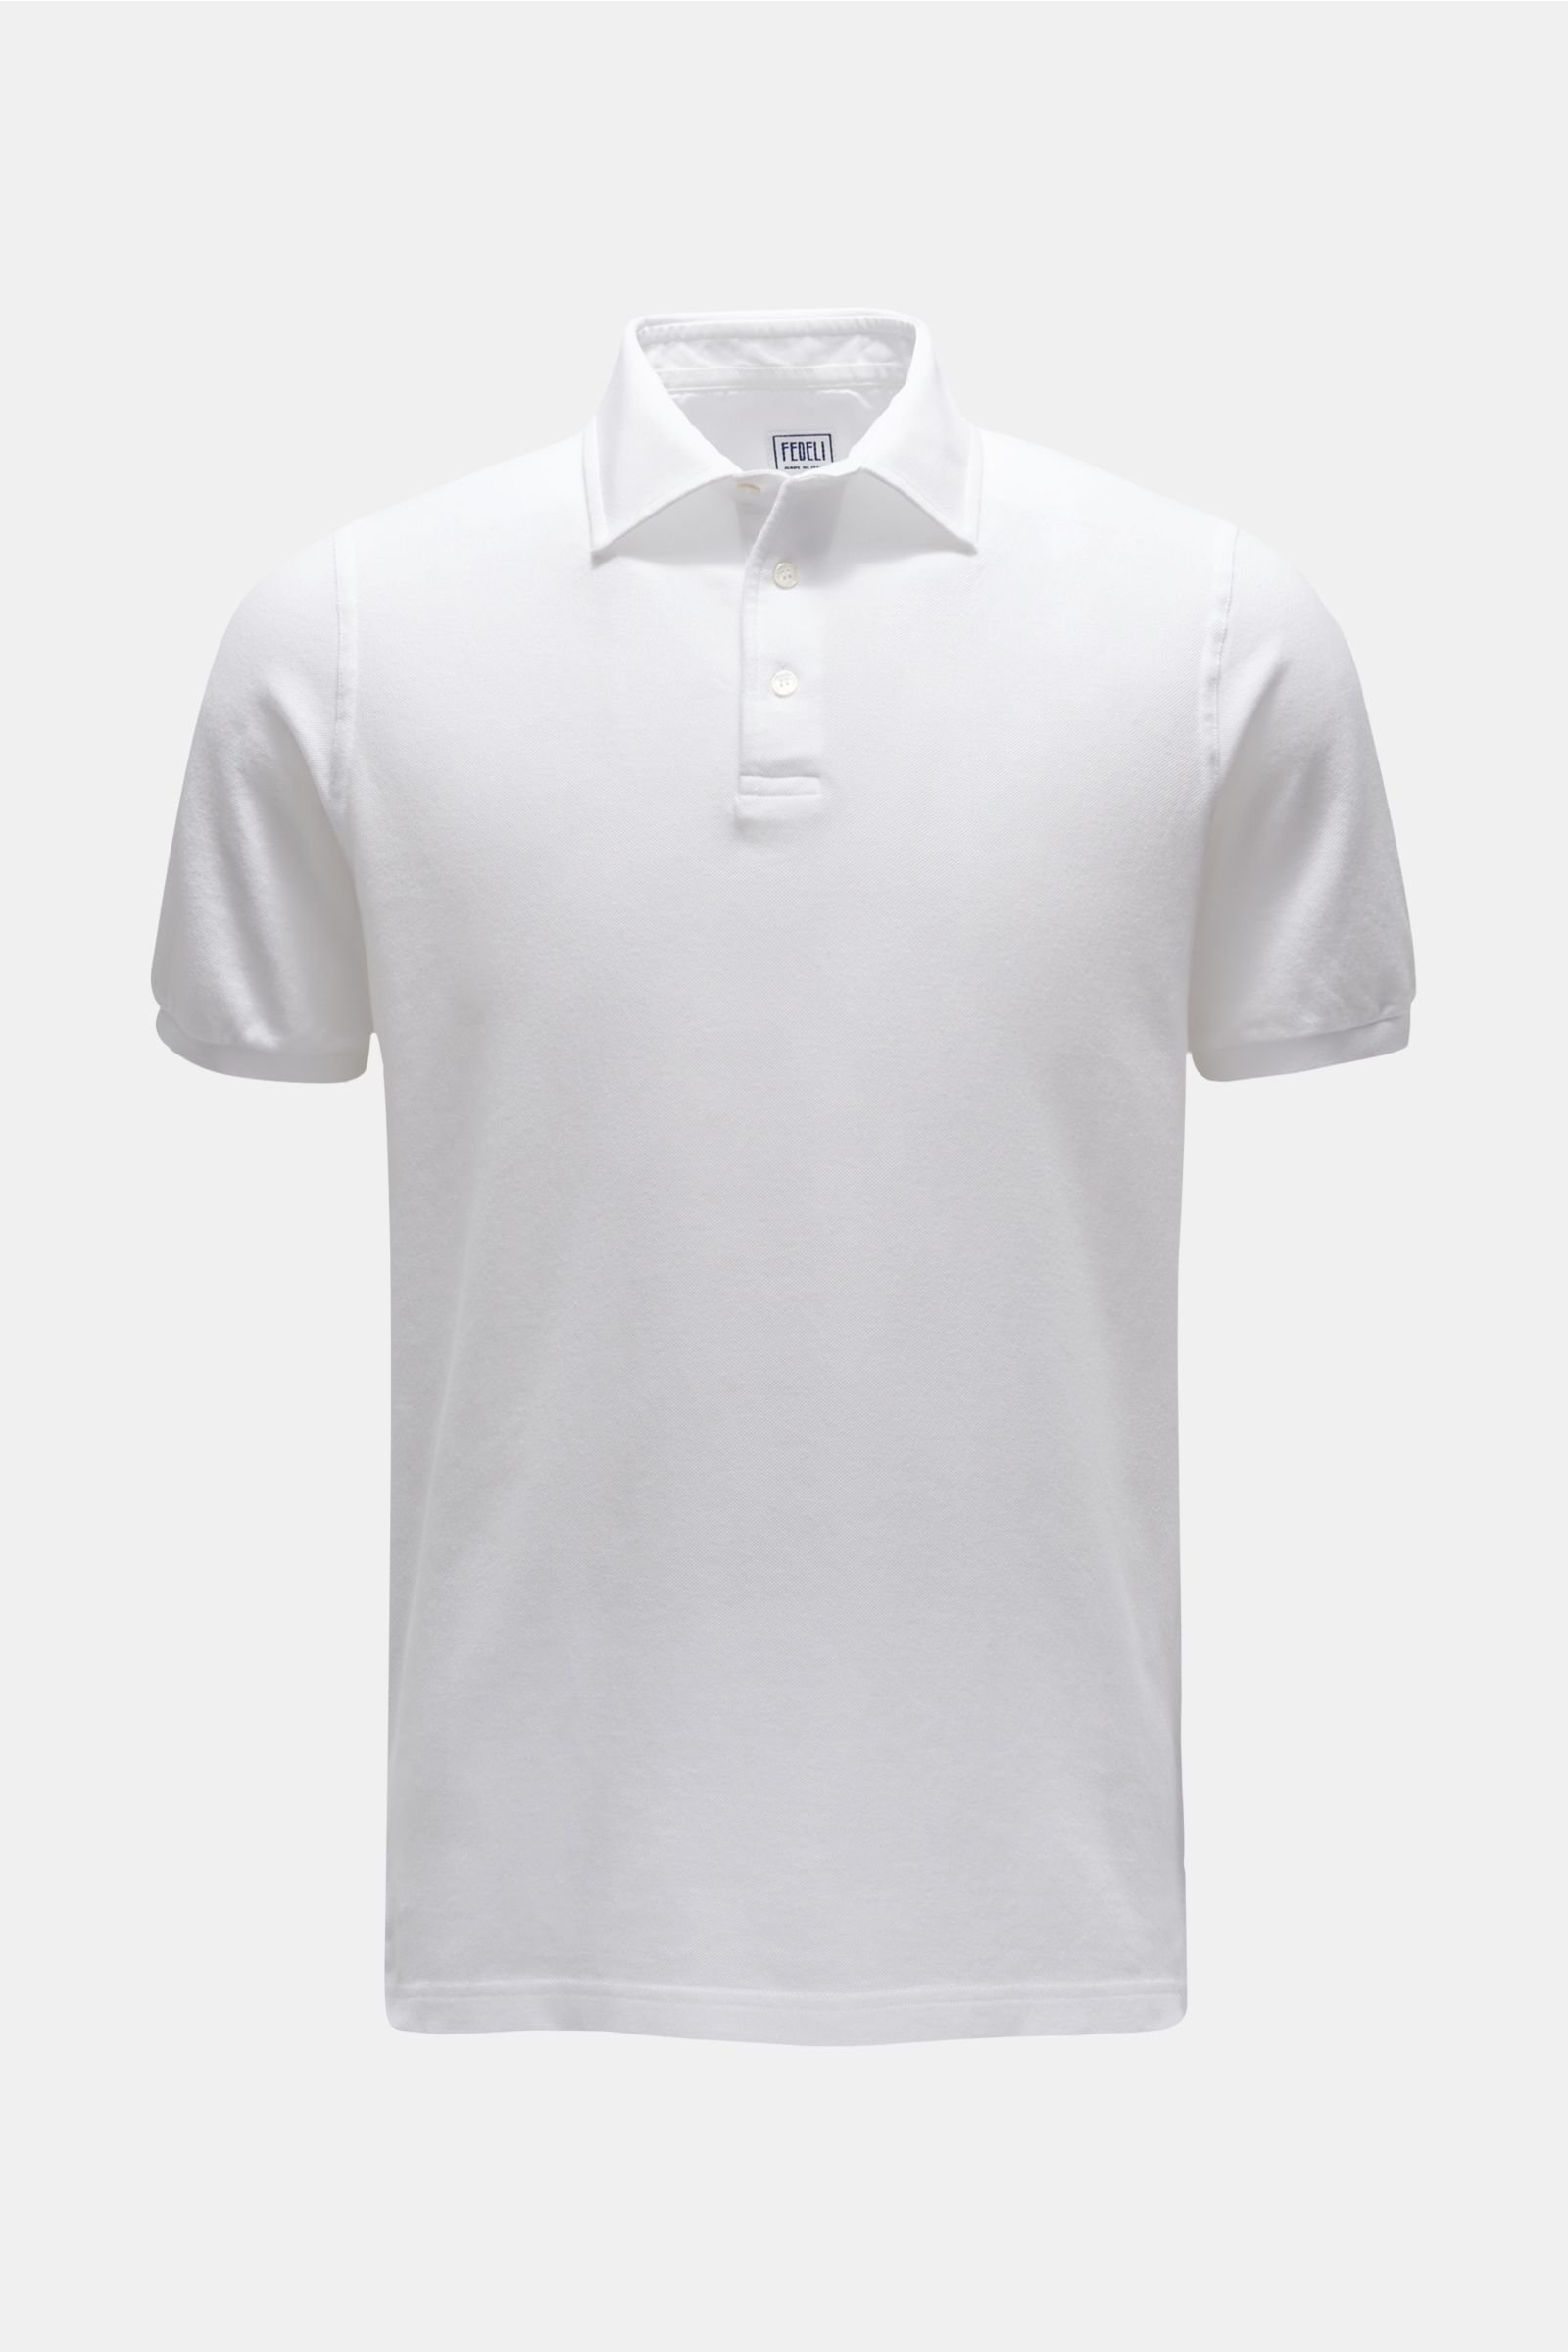 Polo shirt 'North' white